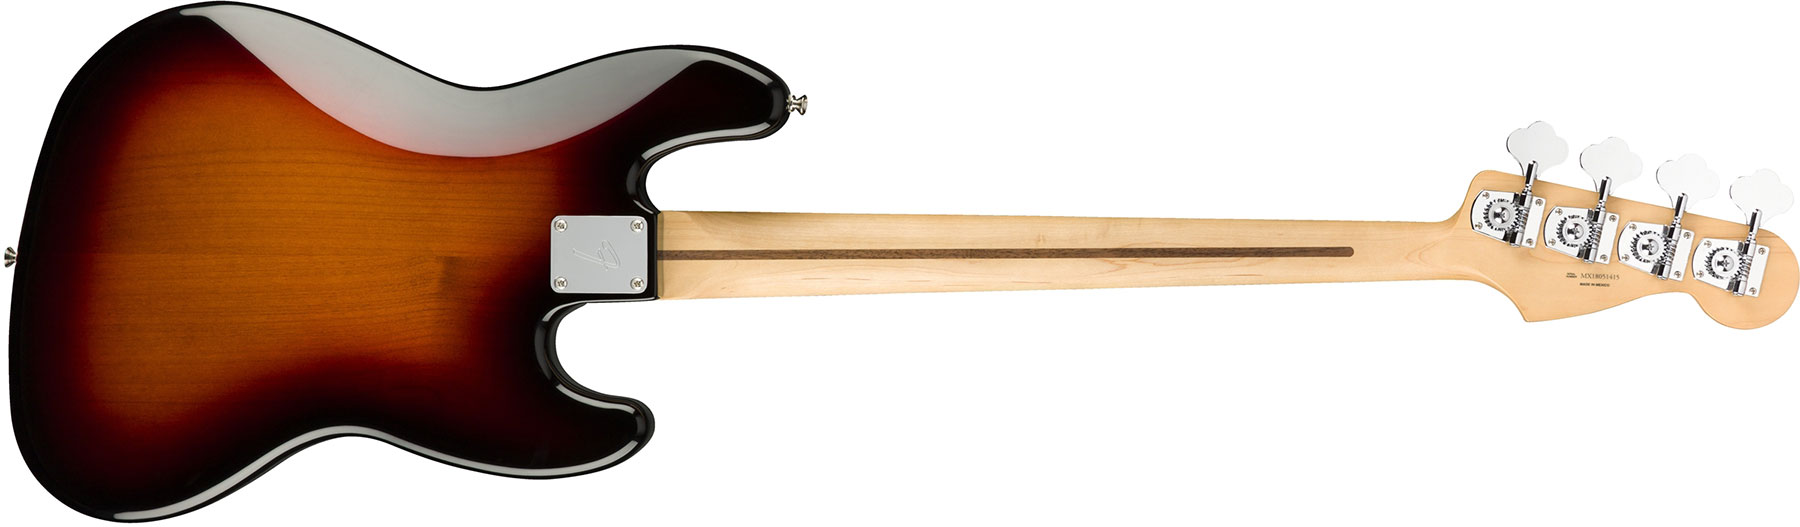 Fender Jazz Bass Player Lh Gaucher Mex Pf - 3-color Sunburst - Bajo eléctrico de cuerpo sólido - Variation 1